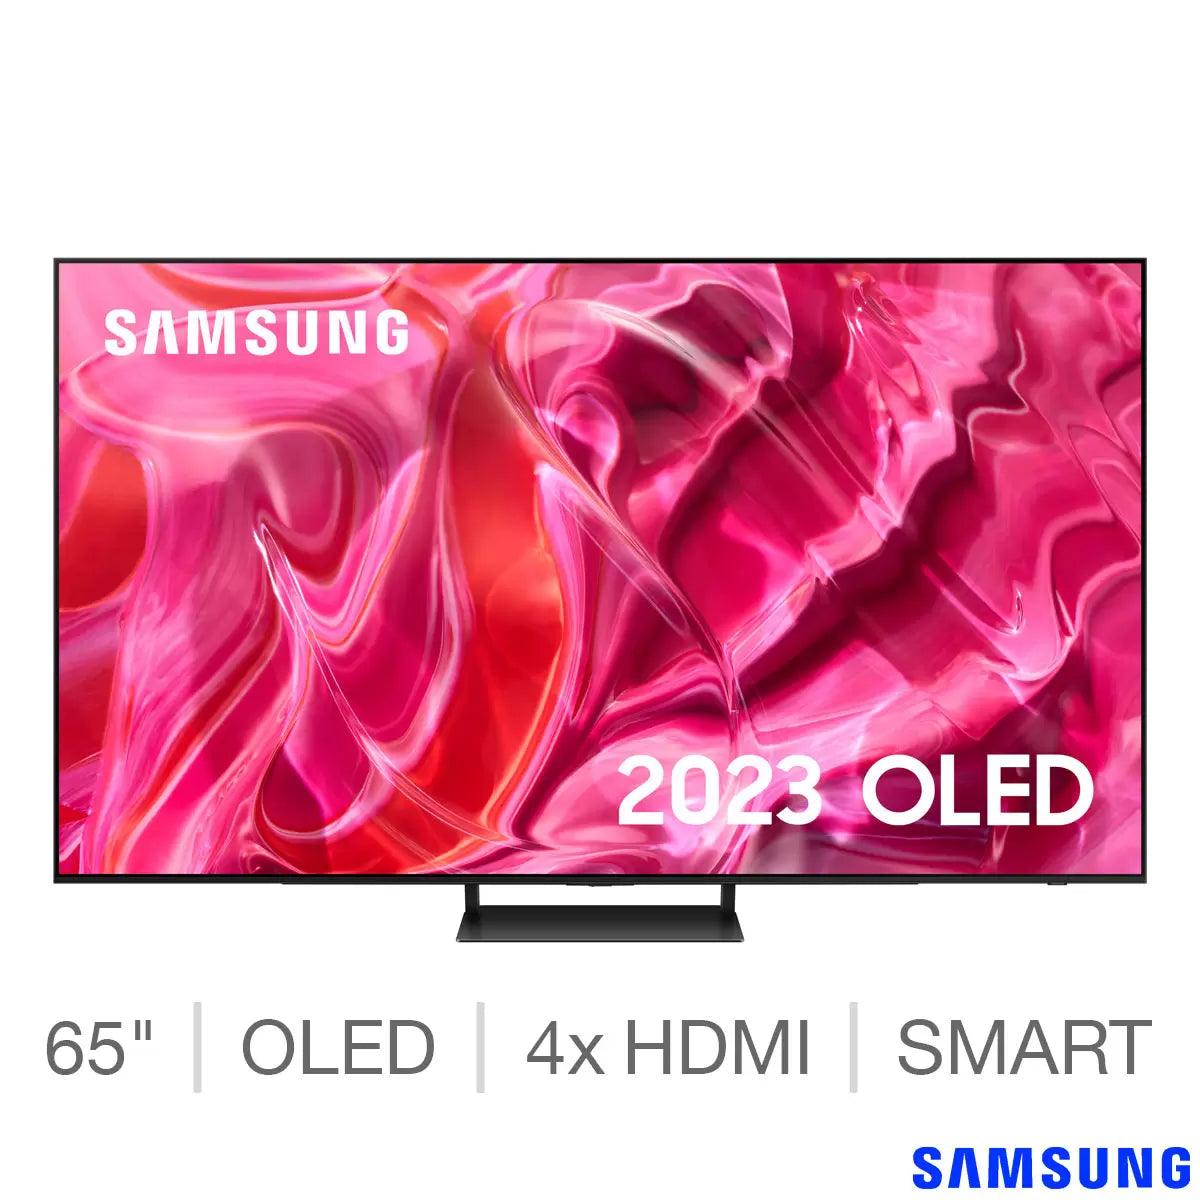 Samsung OLED 4K Ultra HD Smart TV - 65 Inch - Posh Import